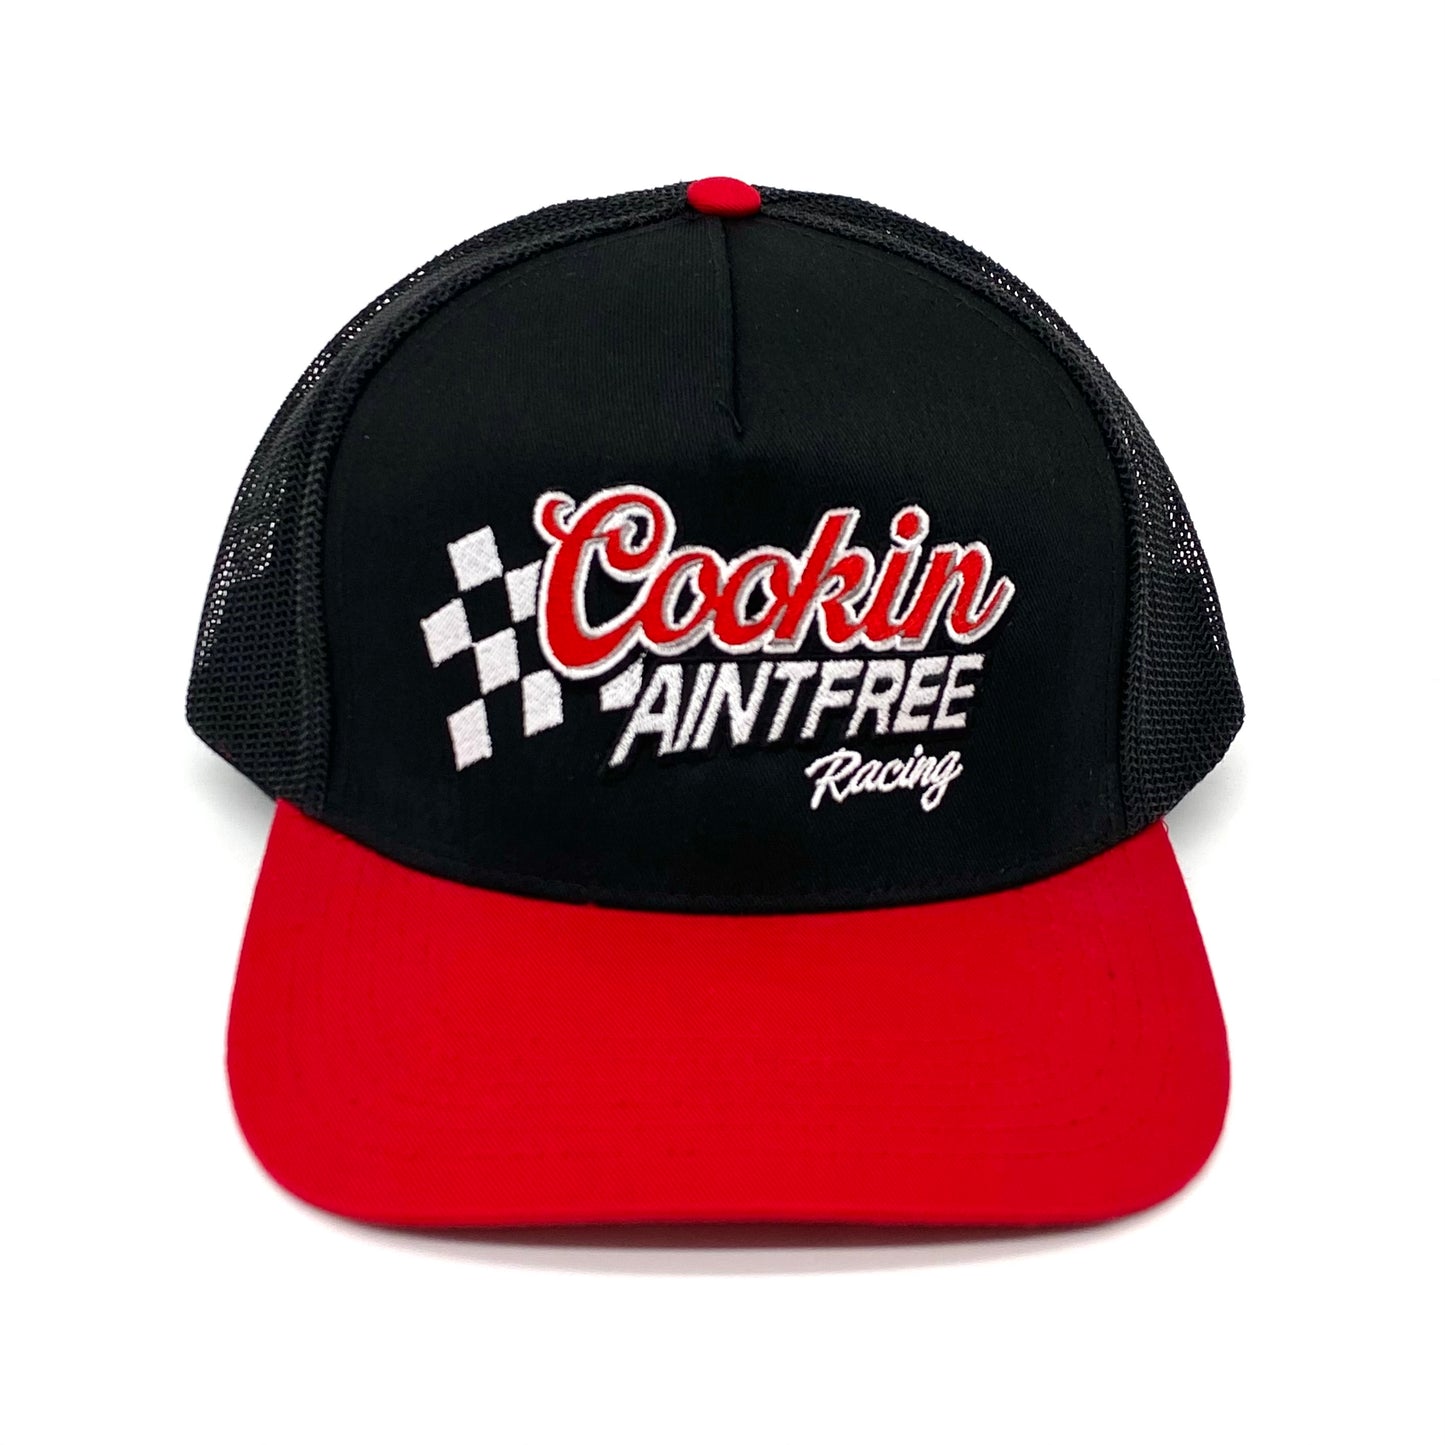 2024 caf racing black/red 5-panel mesh snapback trucker hat